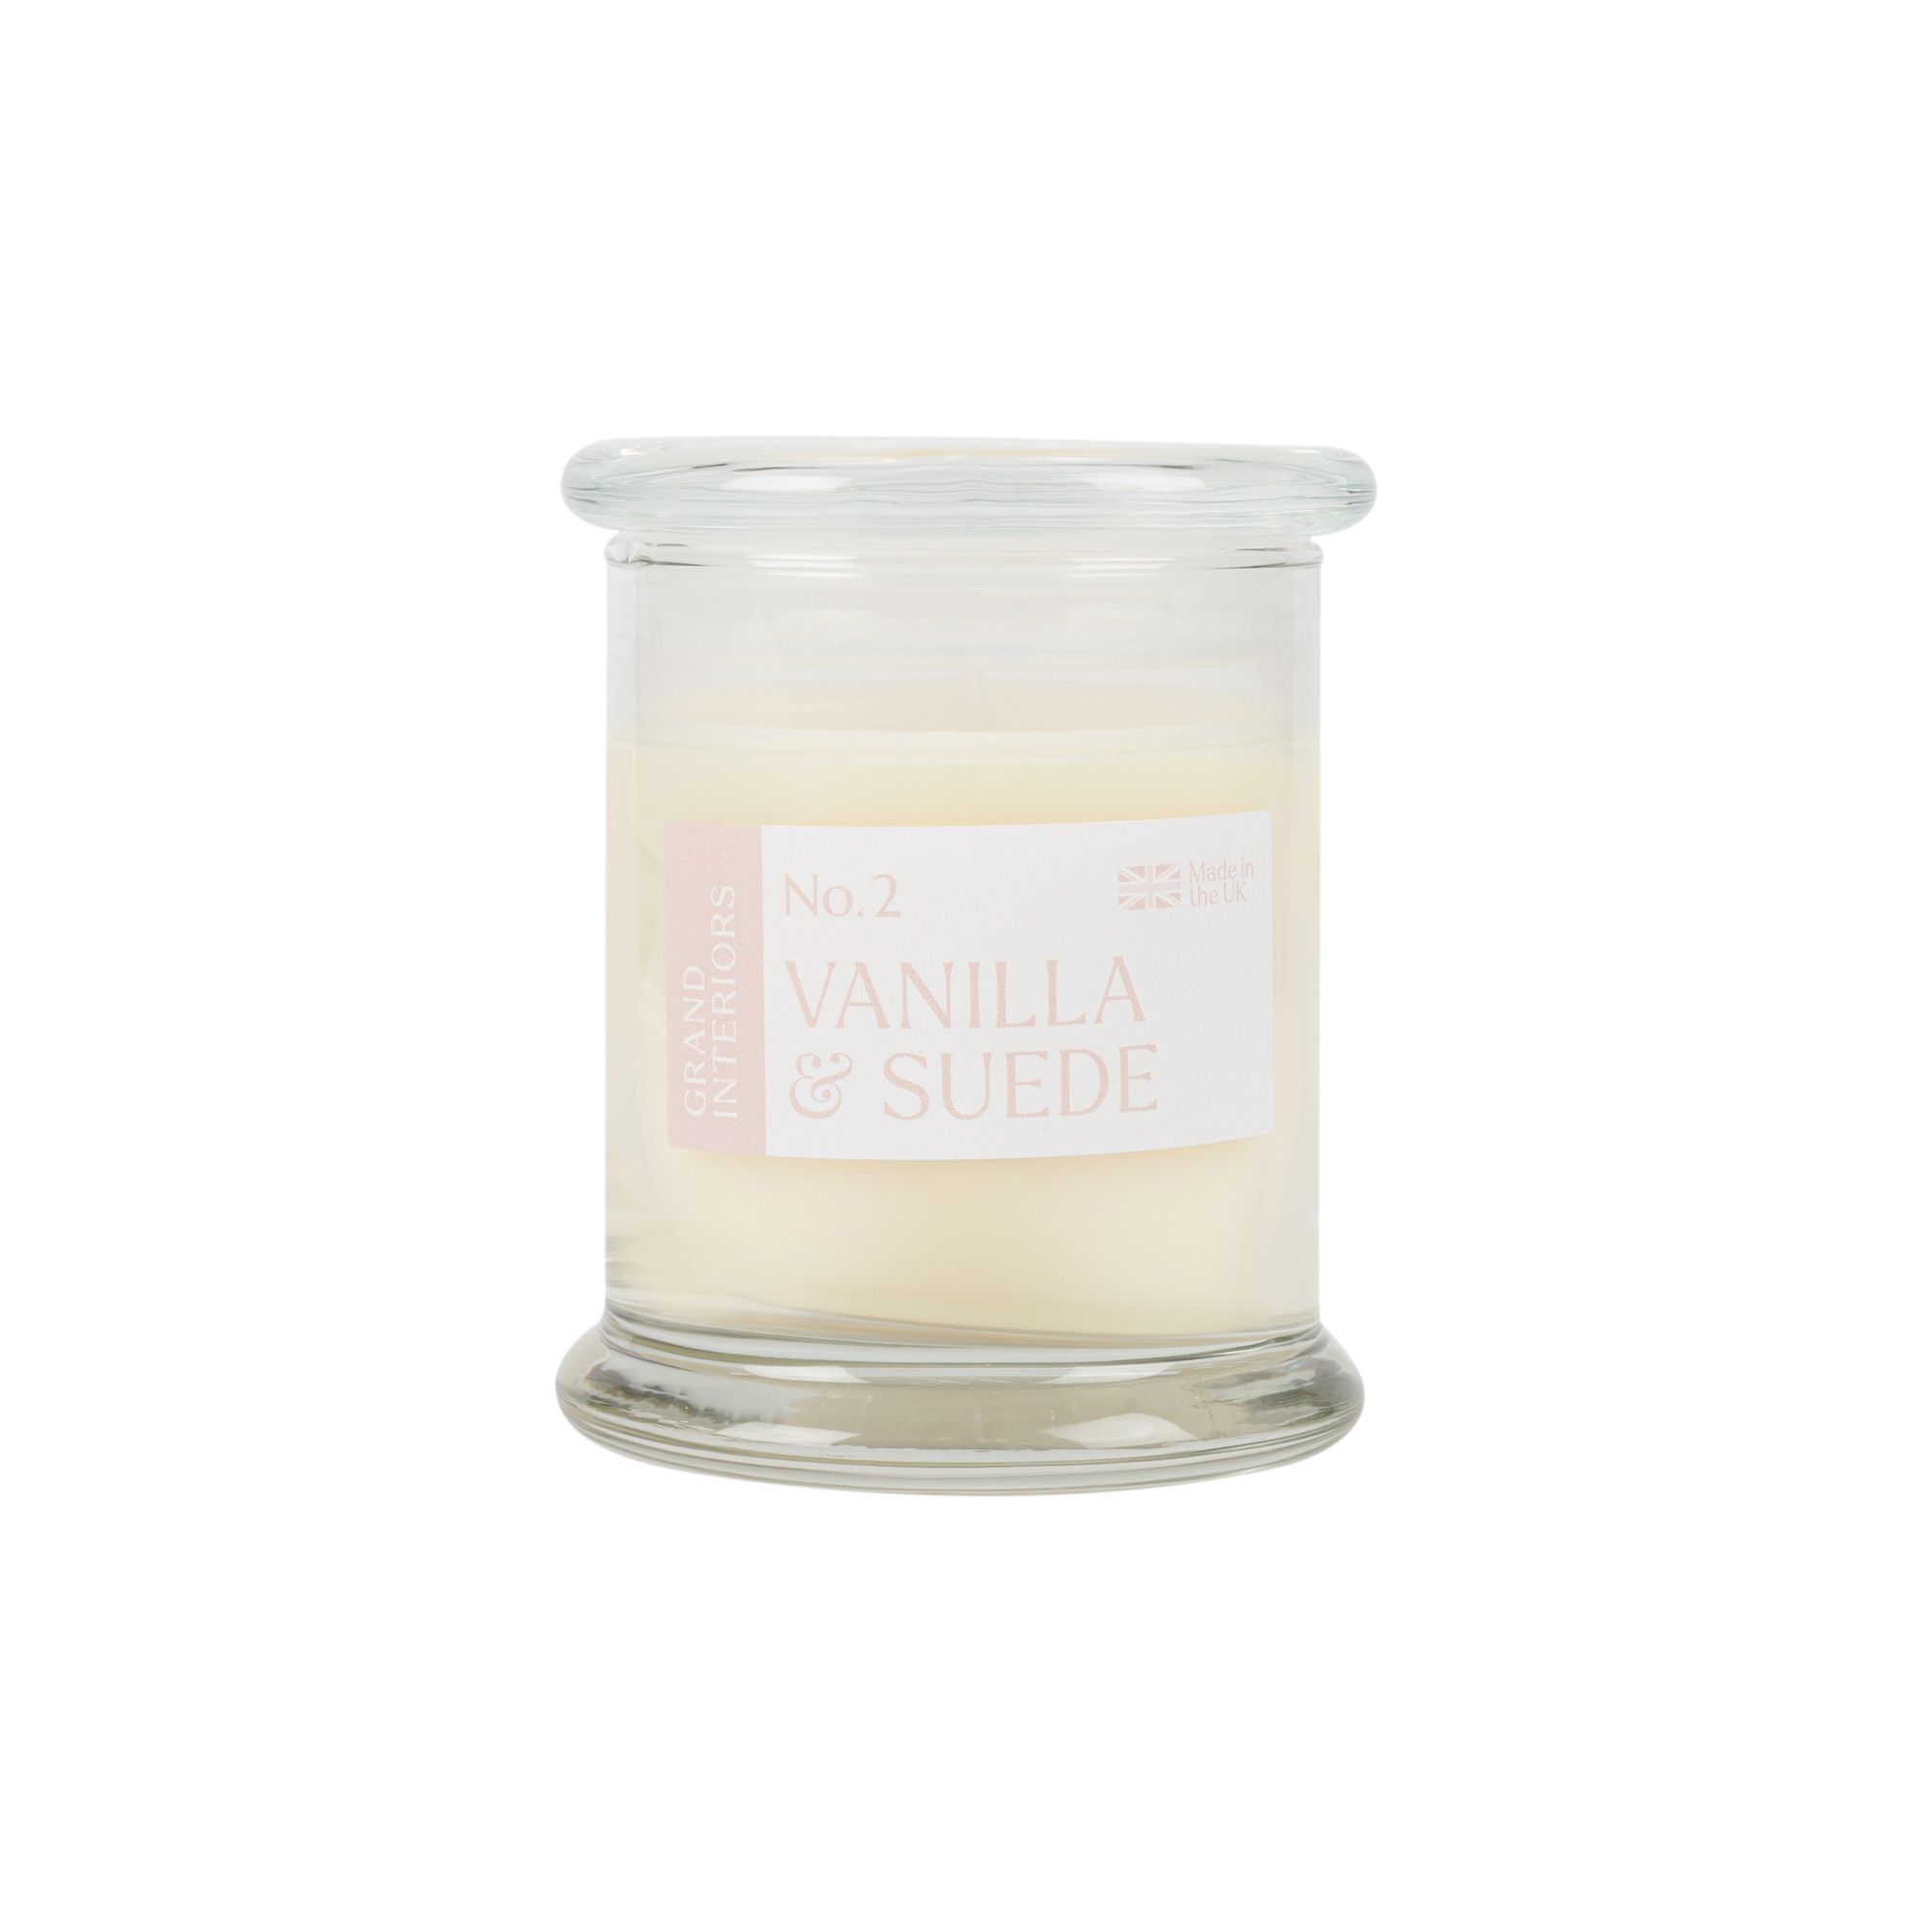 Wax lyrical Cream Vanilla & suede Medium Jar candle, 772g